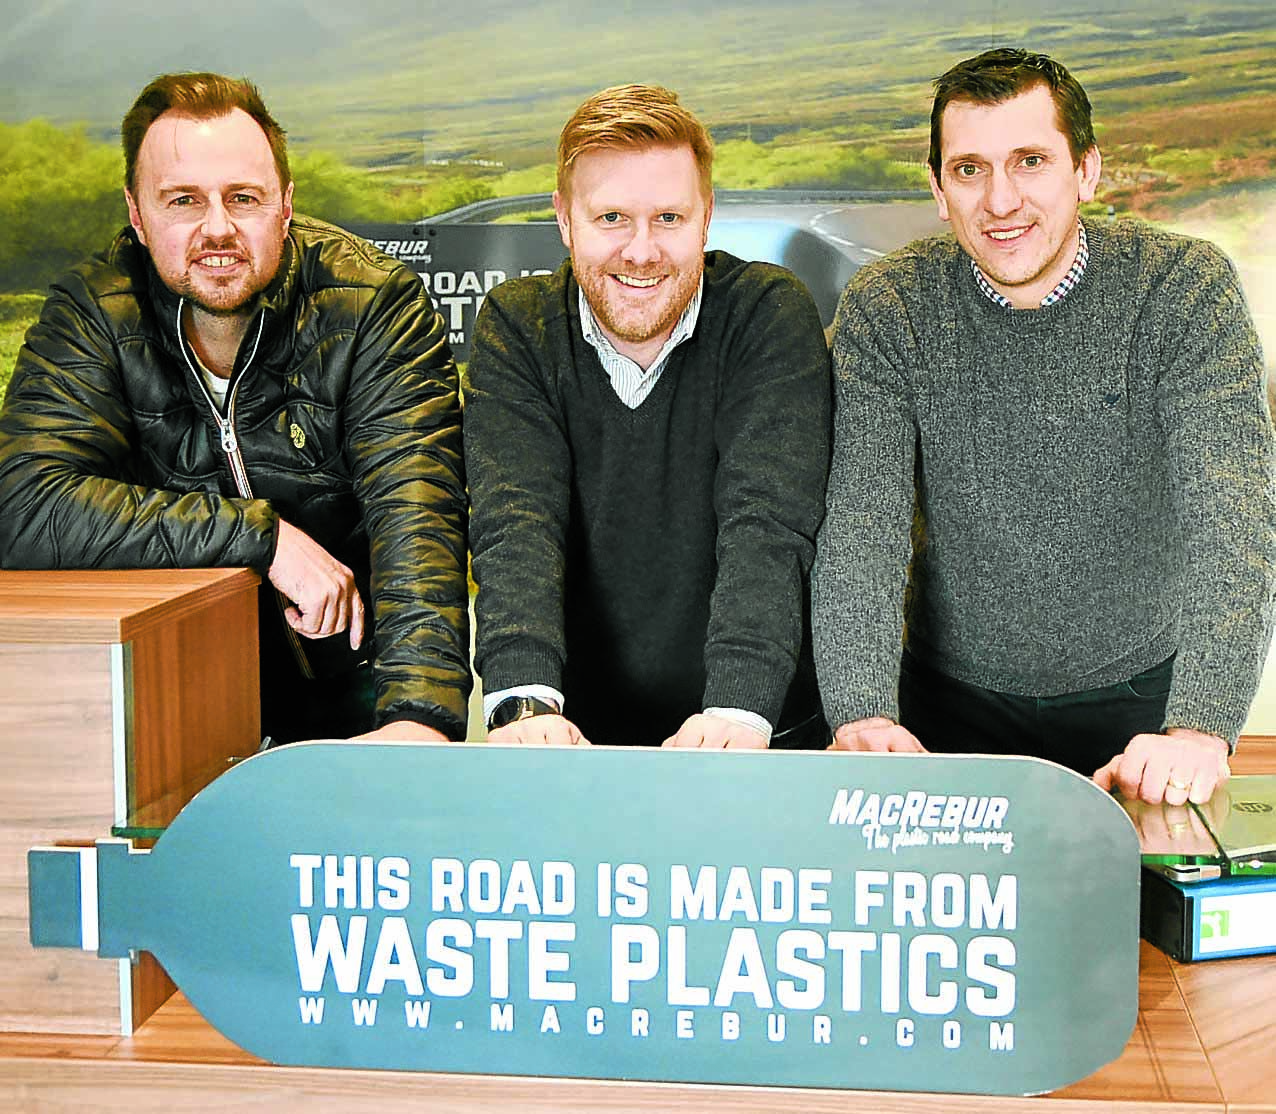 £1.6m boost for plastic roads